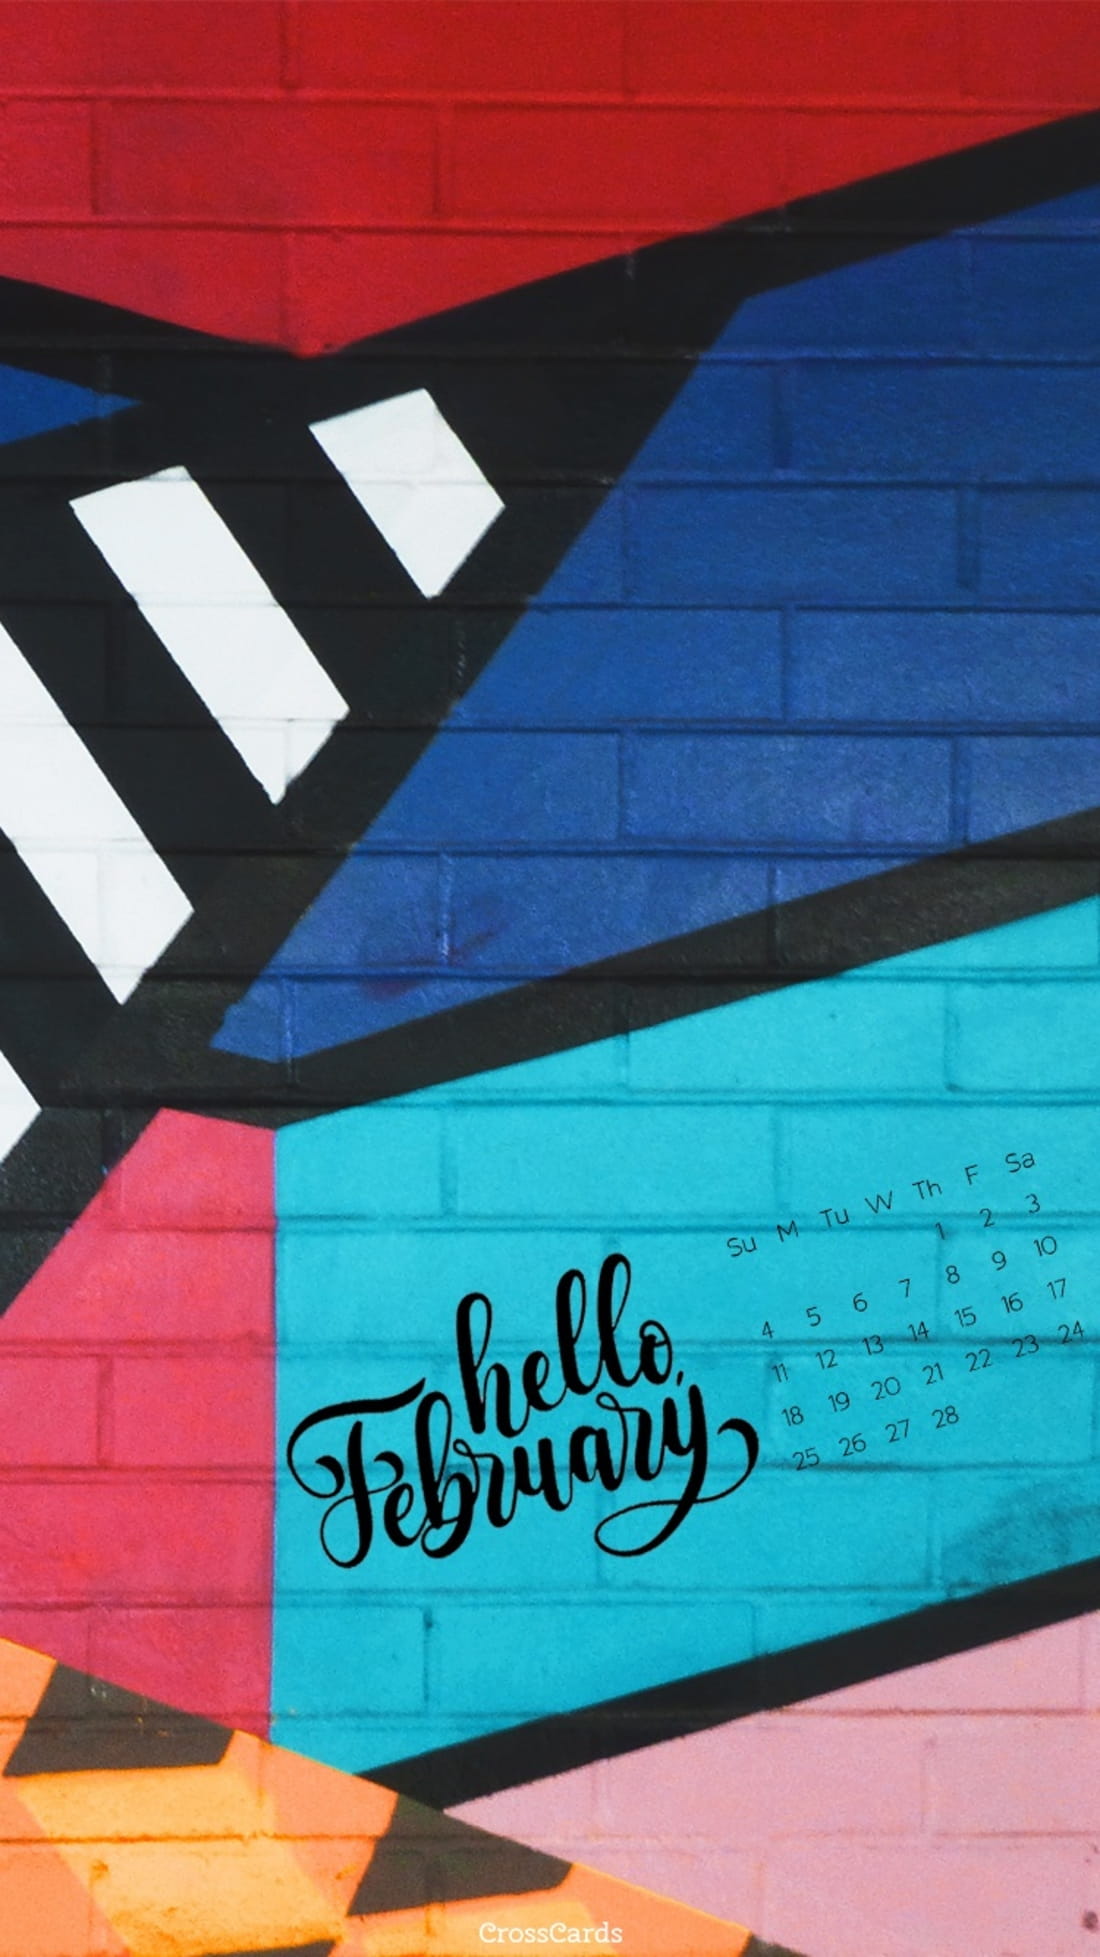 February 2018 - Hello February mobile phone wallpaper